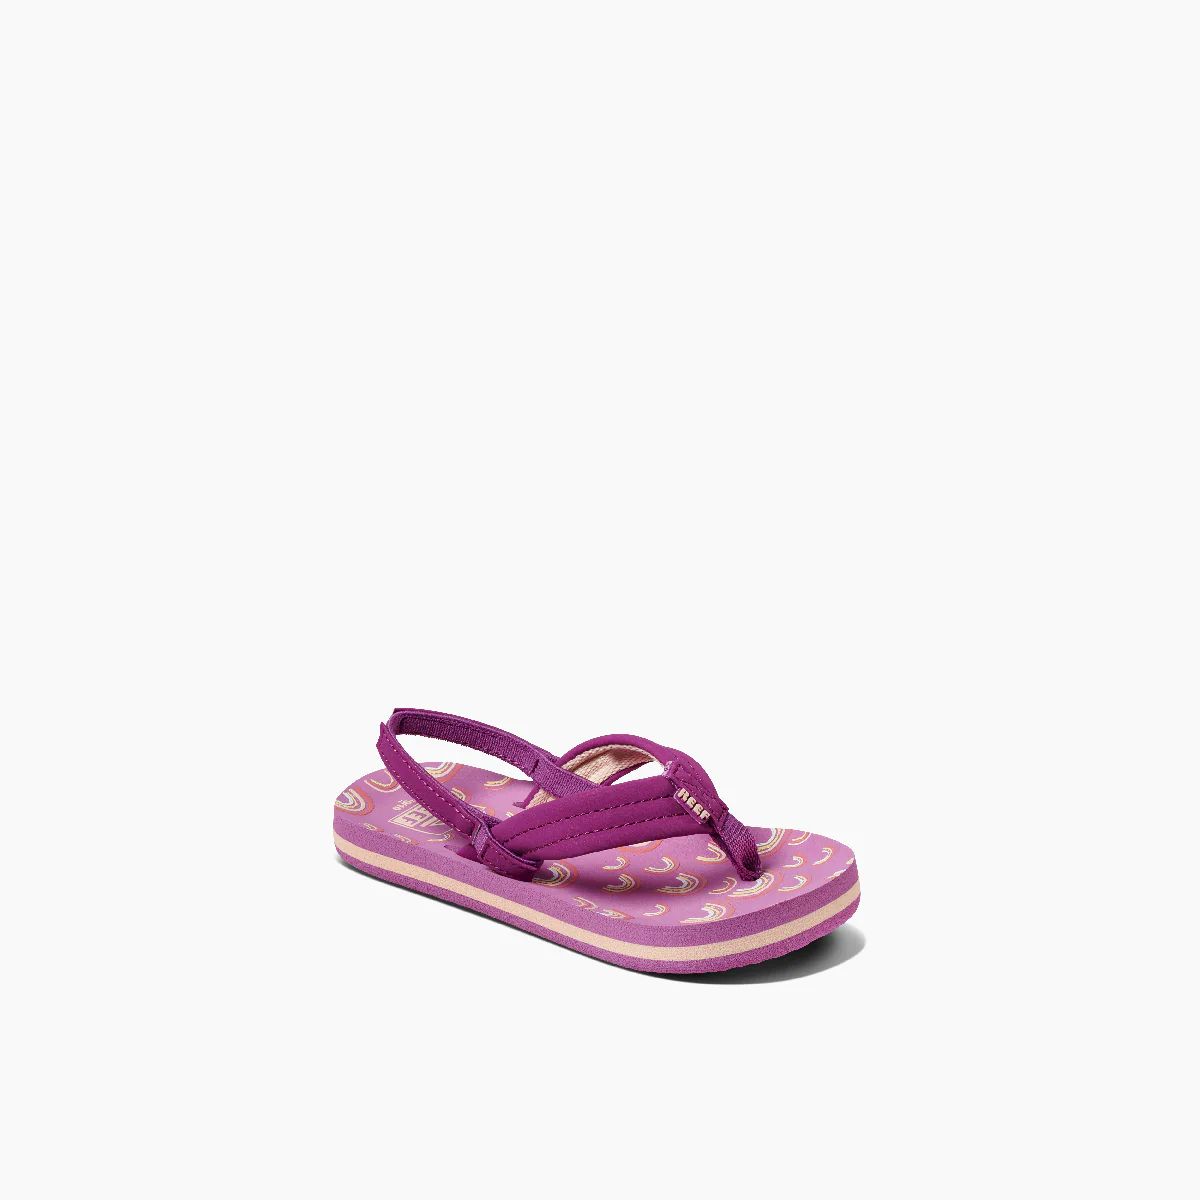 Little Ahi Girls' Sandals | REEF® | Reef